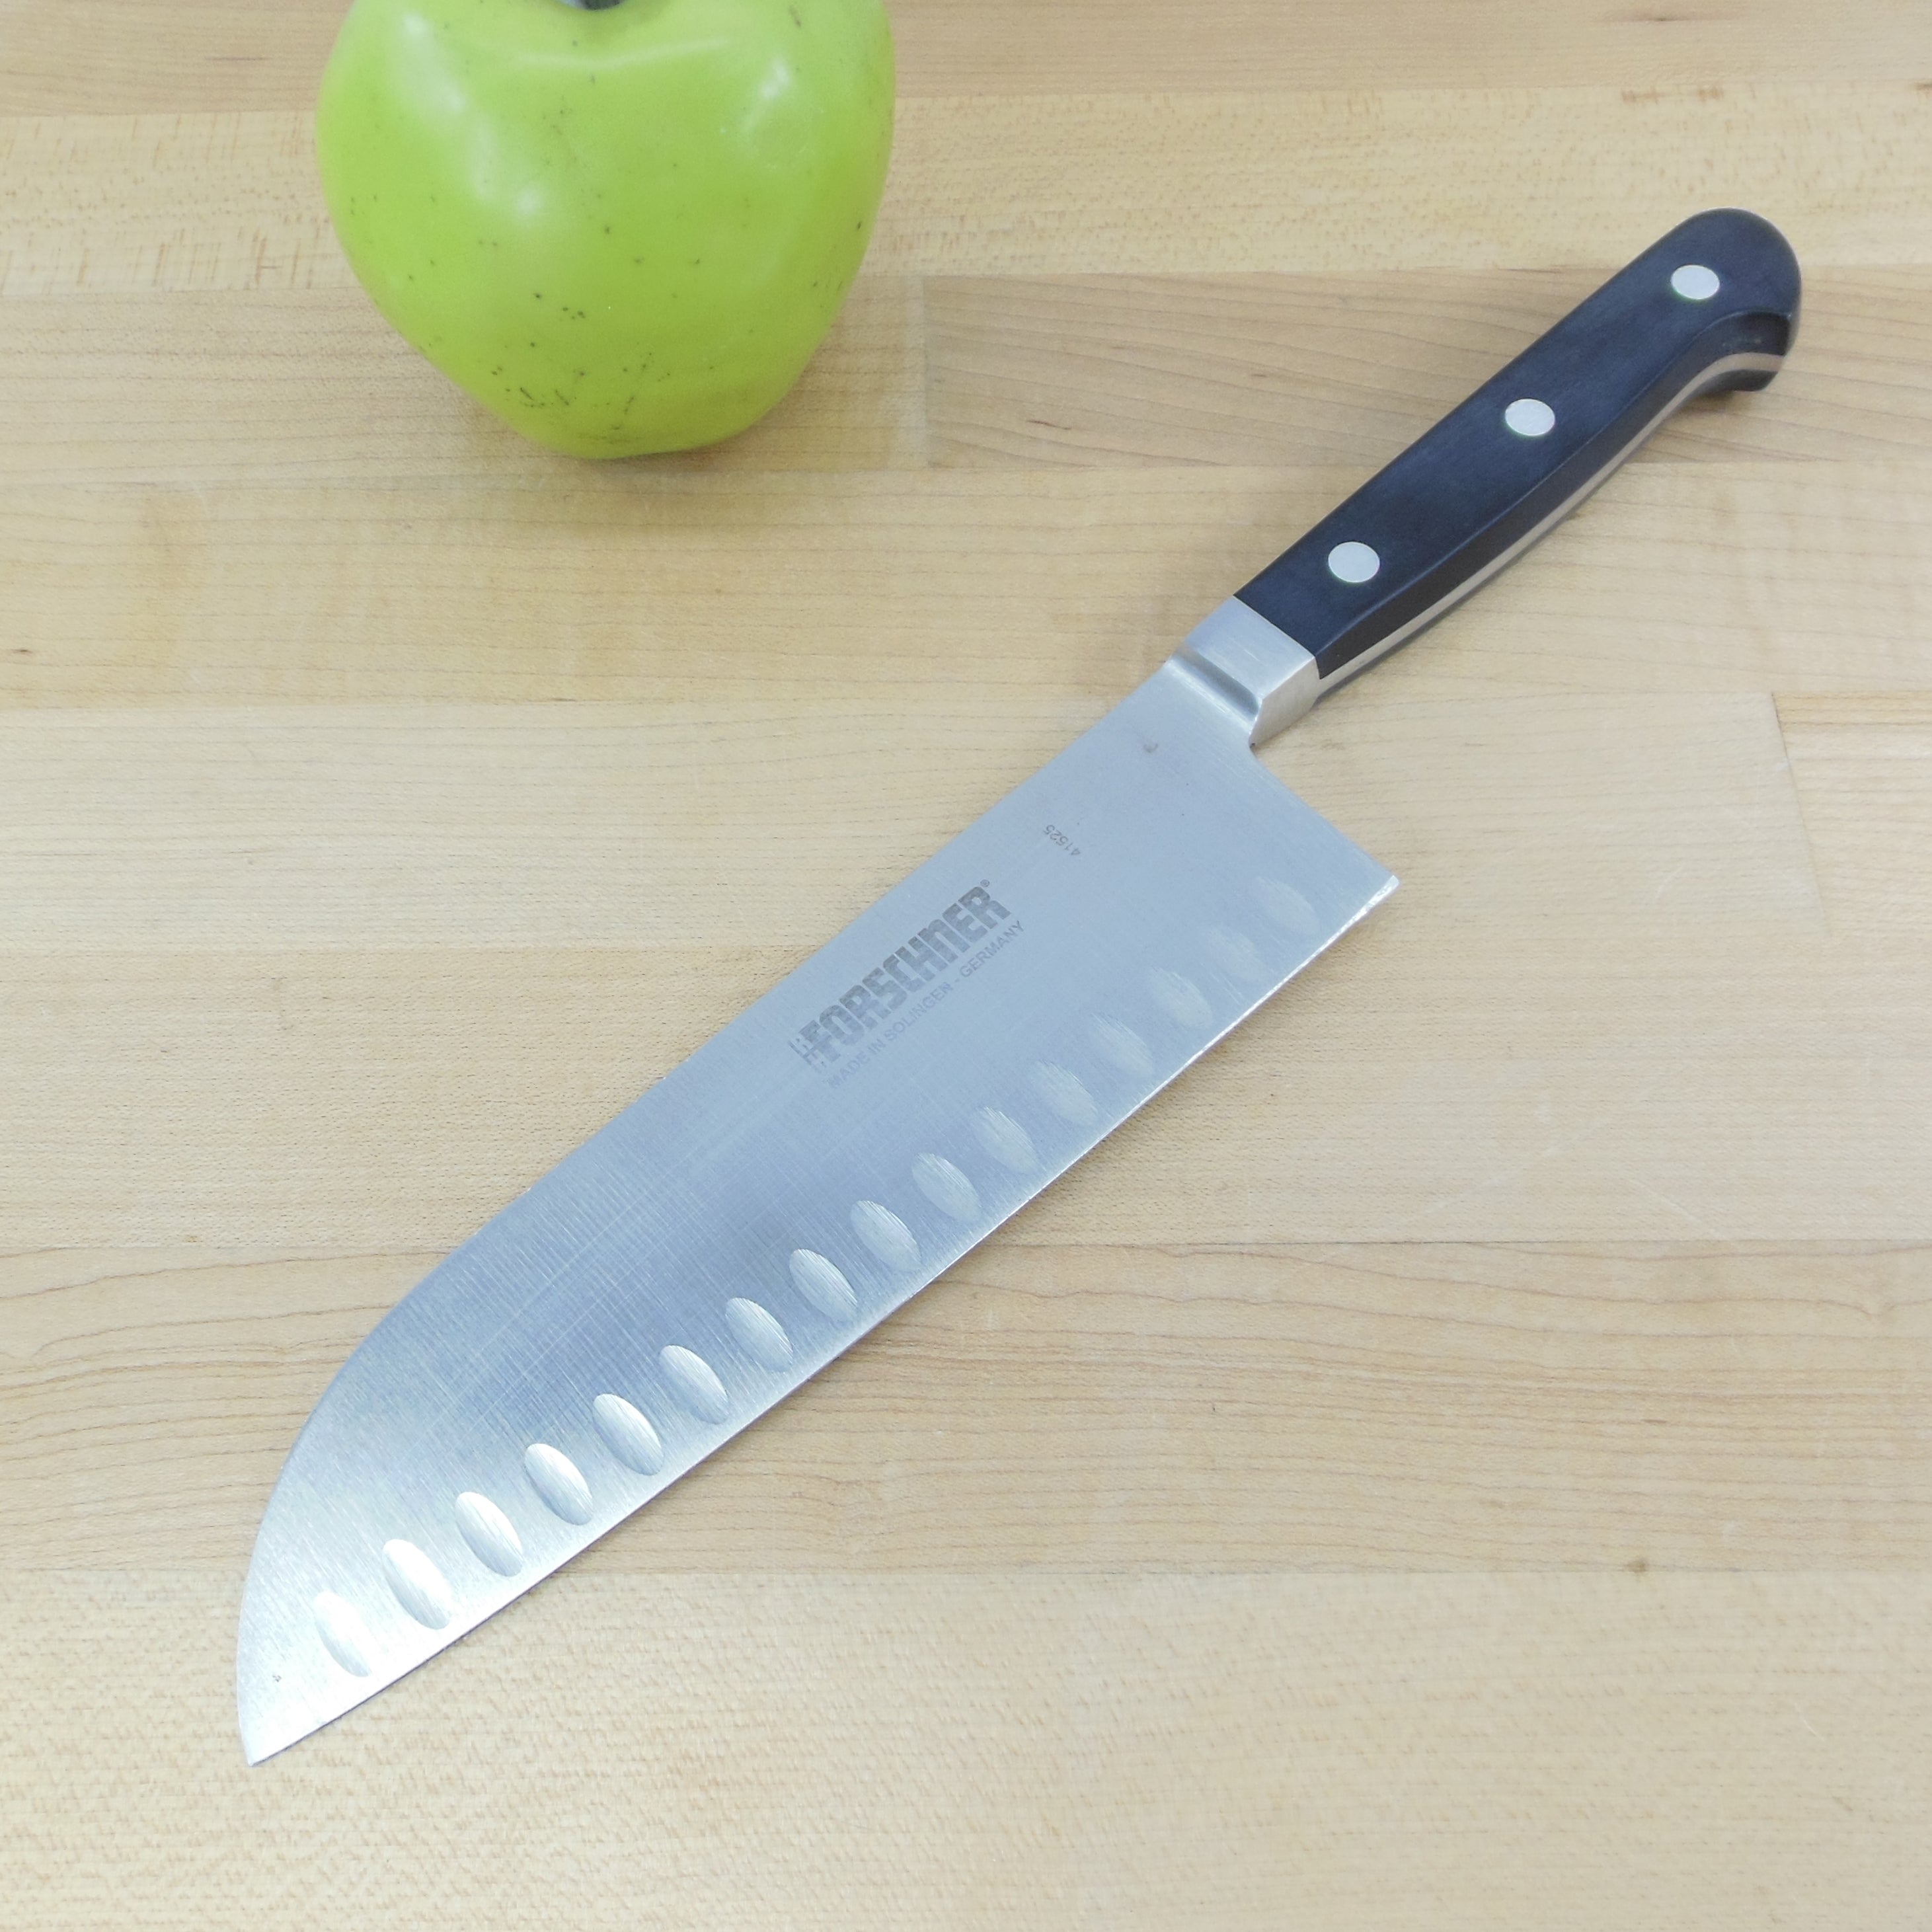 R. H. Forschner Co Victorinox Switzerland Stainless Steel 7 in Chef`s Knife